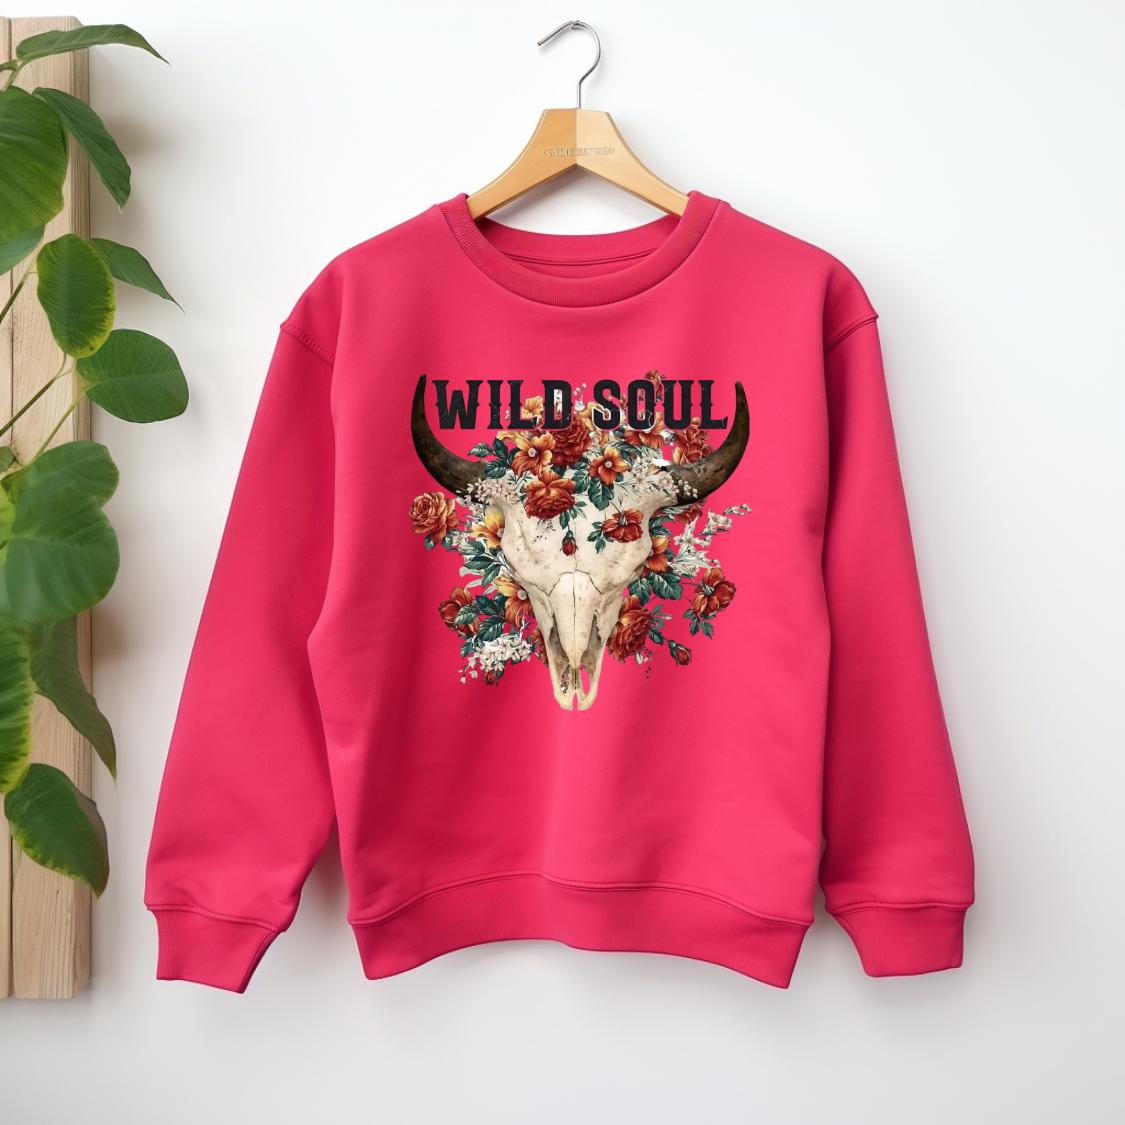 Wild Soul Crewneck: Embrace the Untamed in Super Soft Comfort